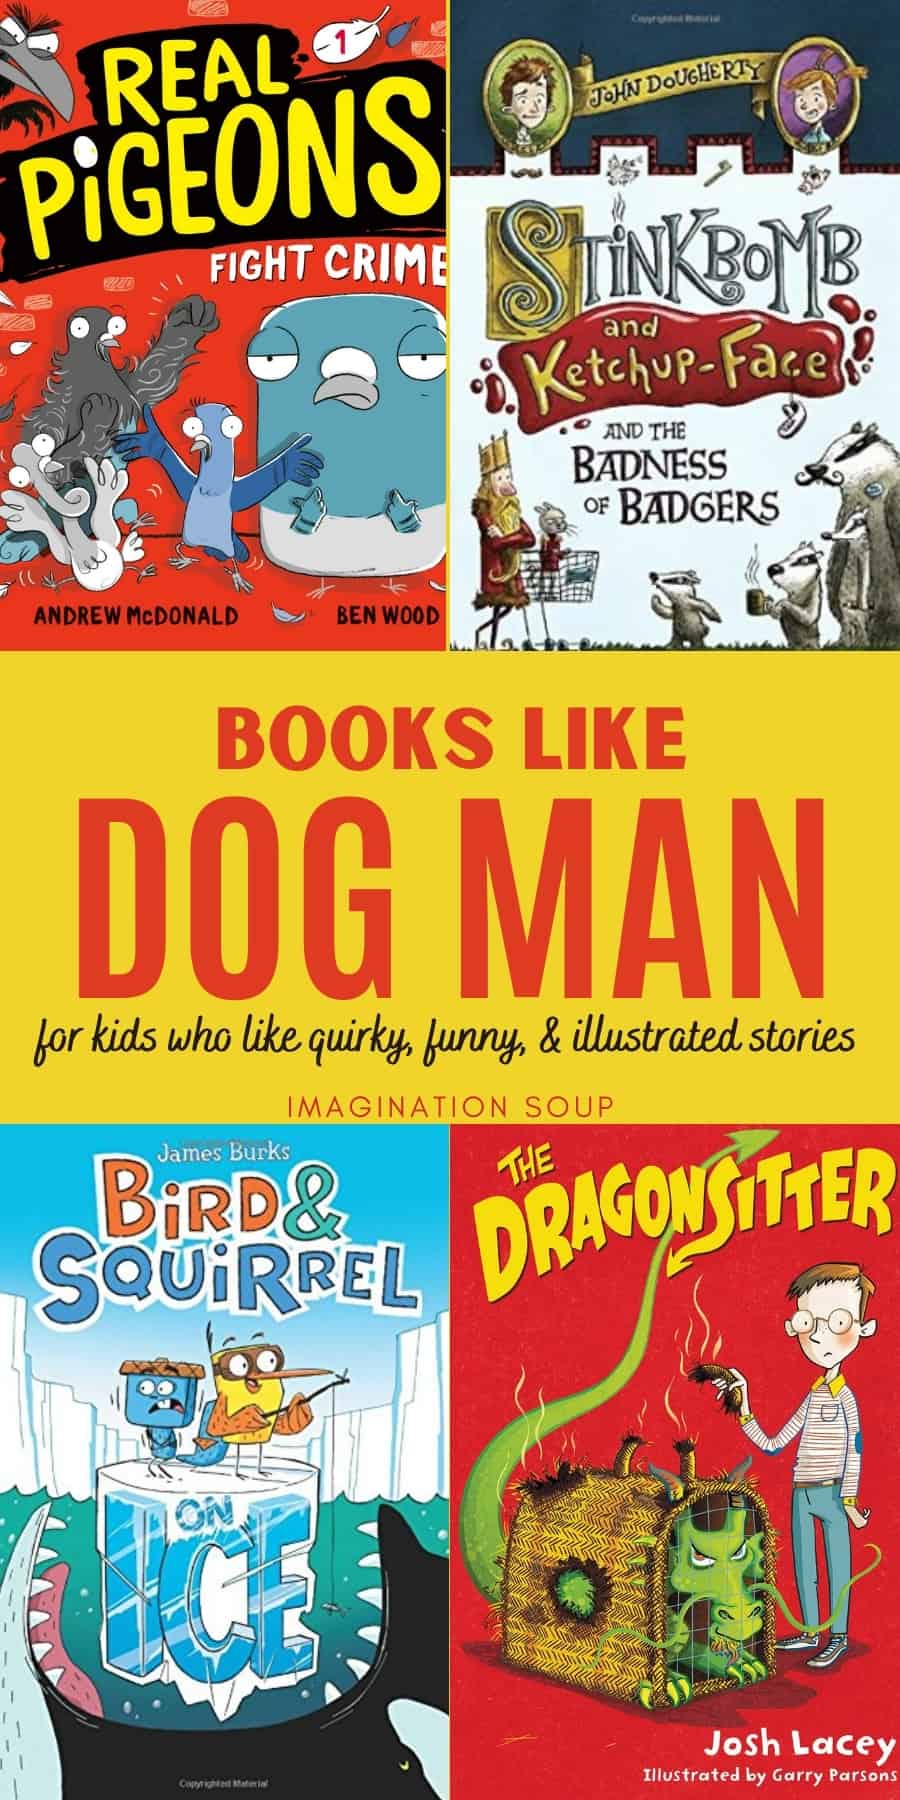 Books like Dog Man